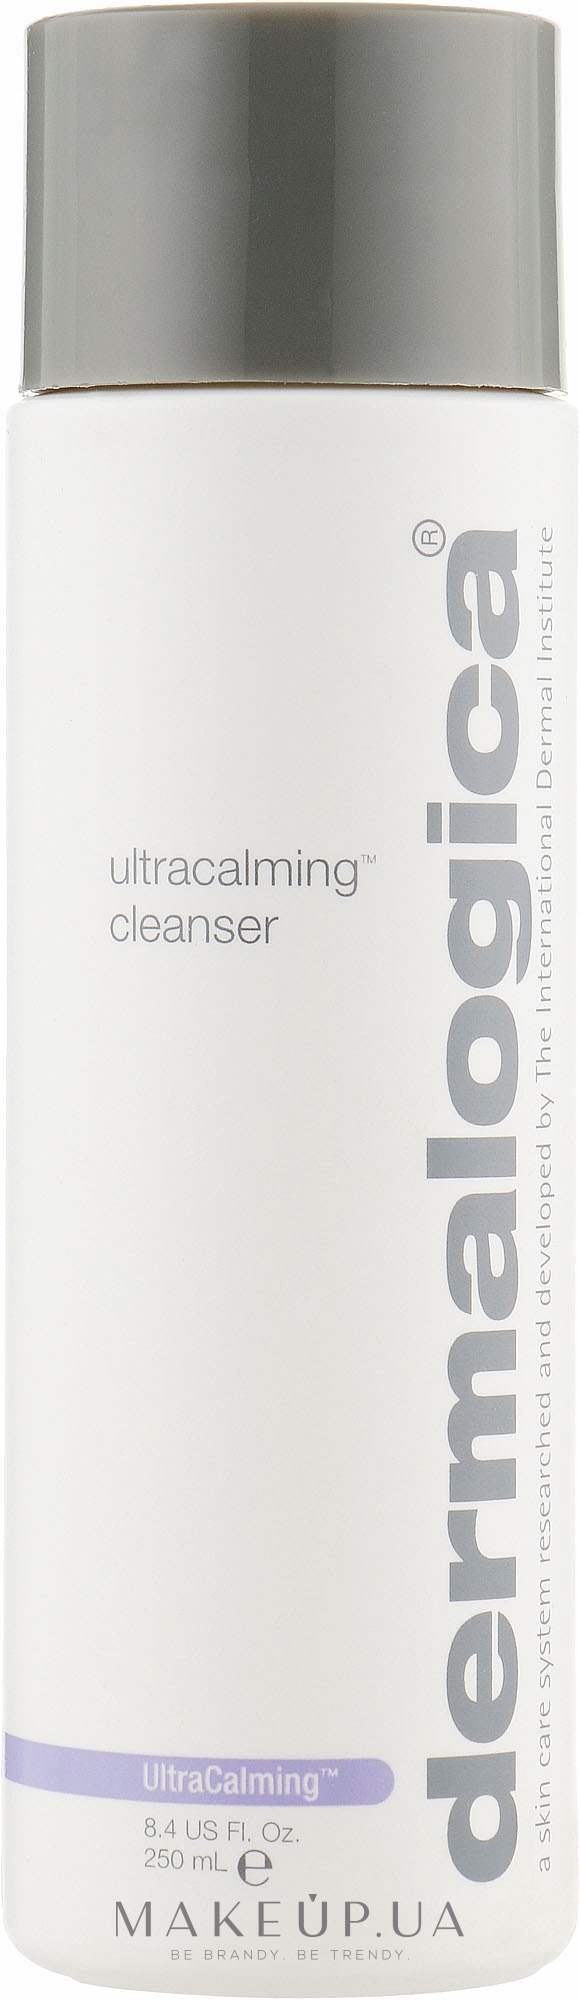 Ультраніжний очисник для обличчя - Dermalogica Ultracalming Cleanser — фото 250ml